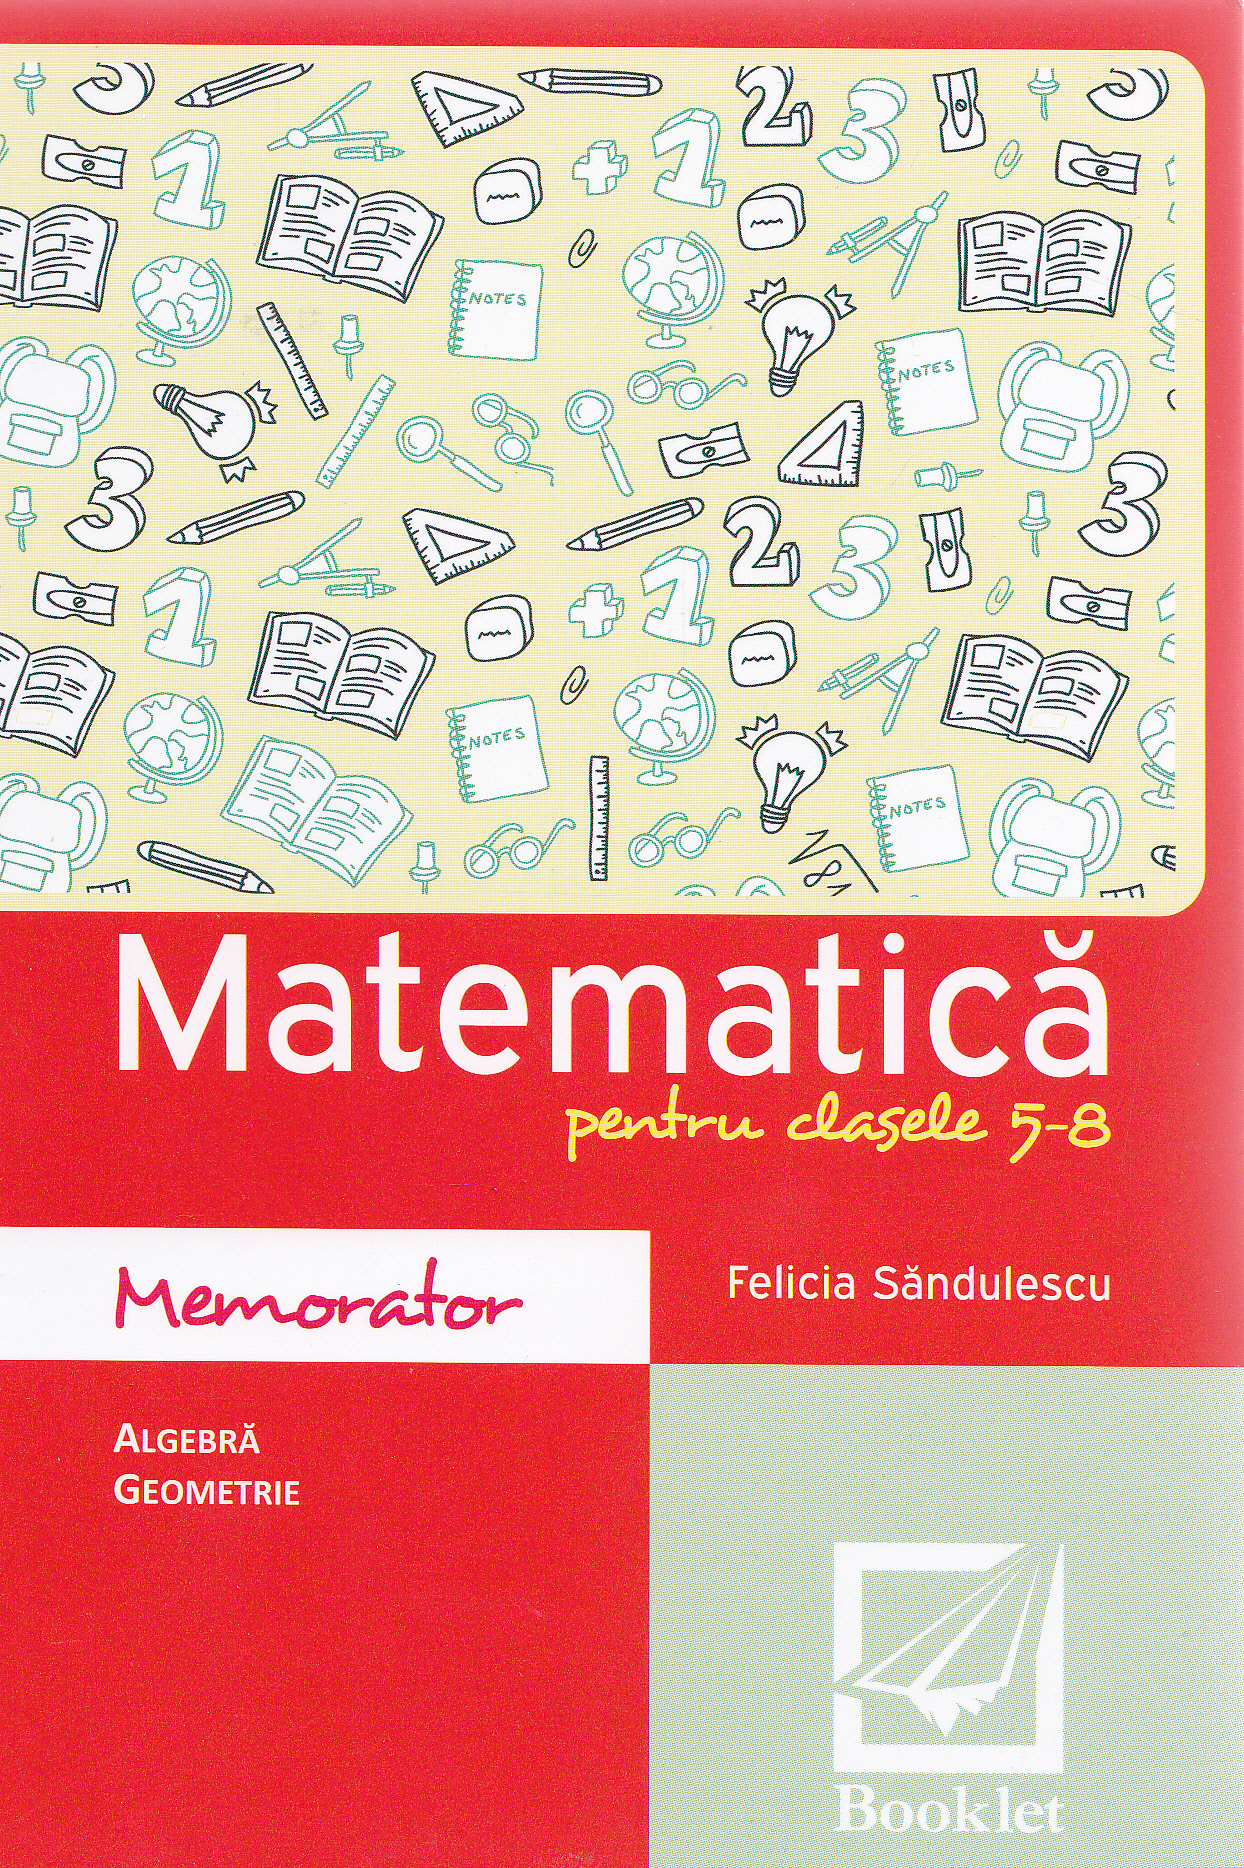 Memorator de matematica cls 5-8 ed.2016 - Felicia Sandulescu